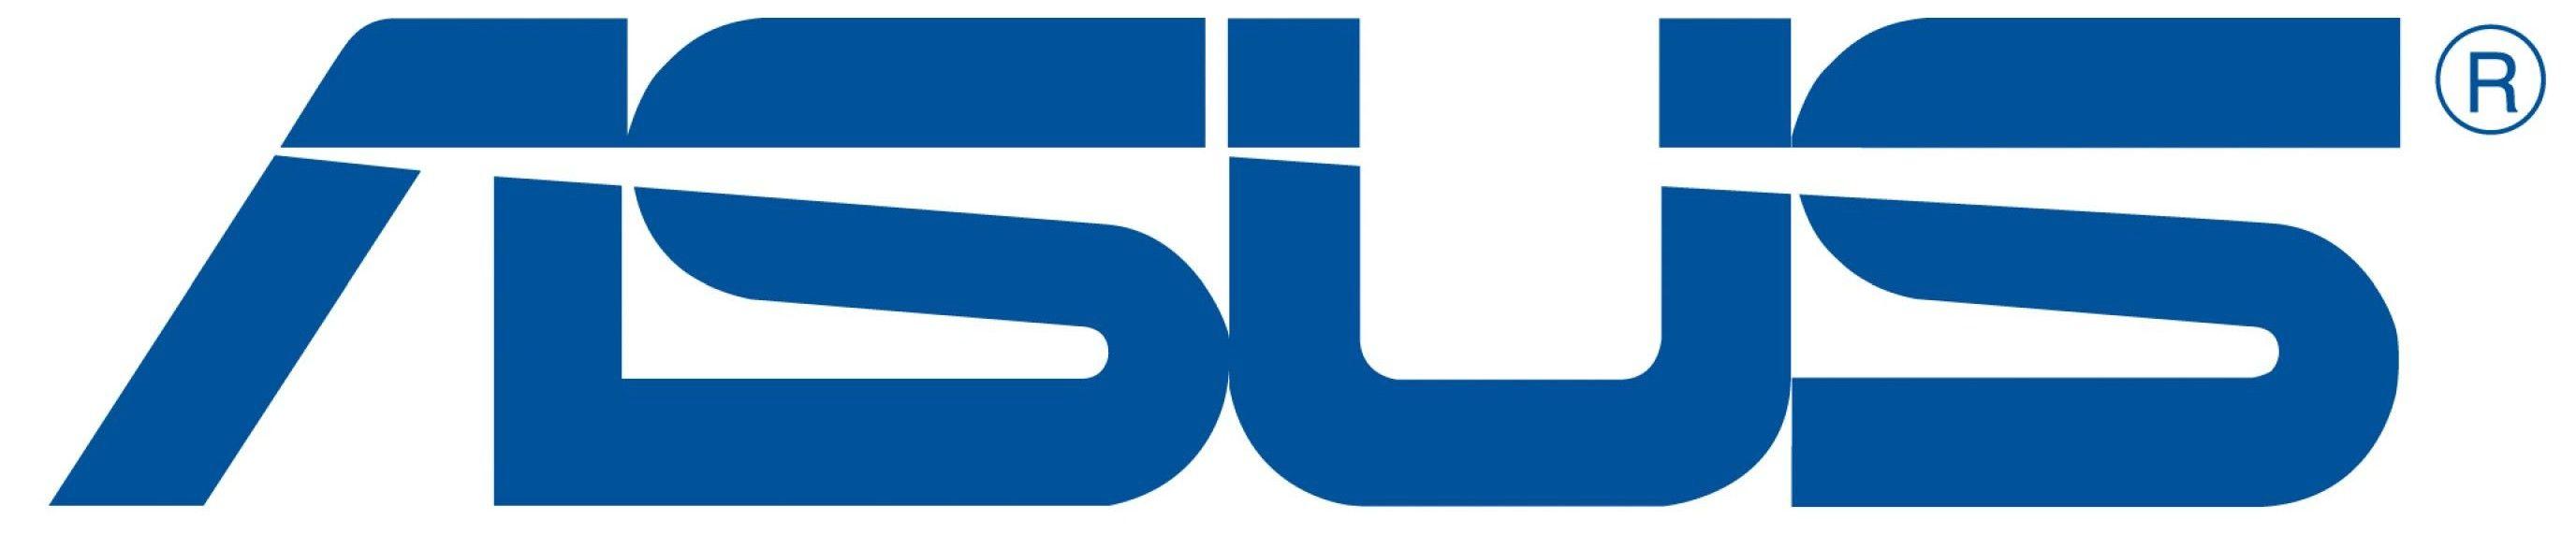 Asus Company Logo - Asus logo download